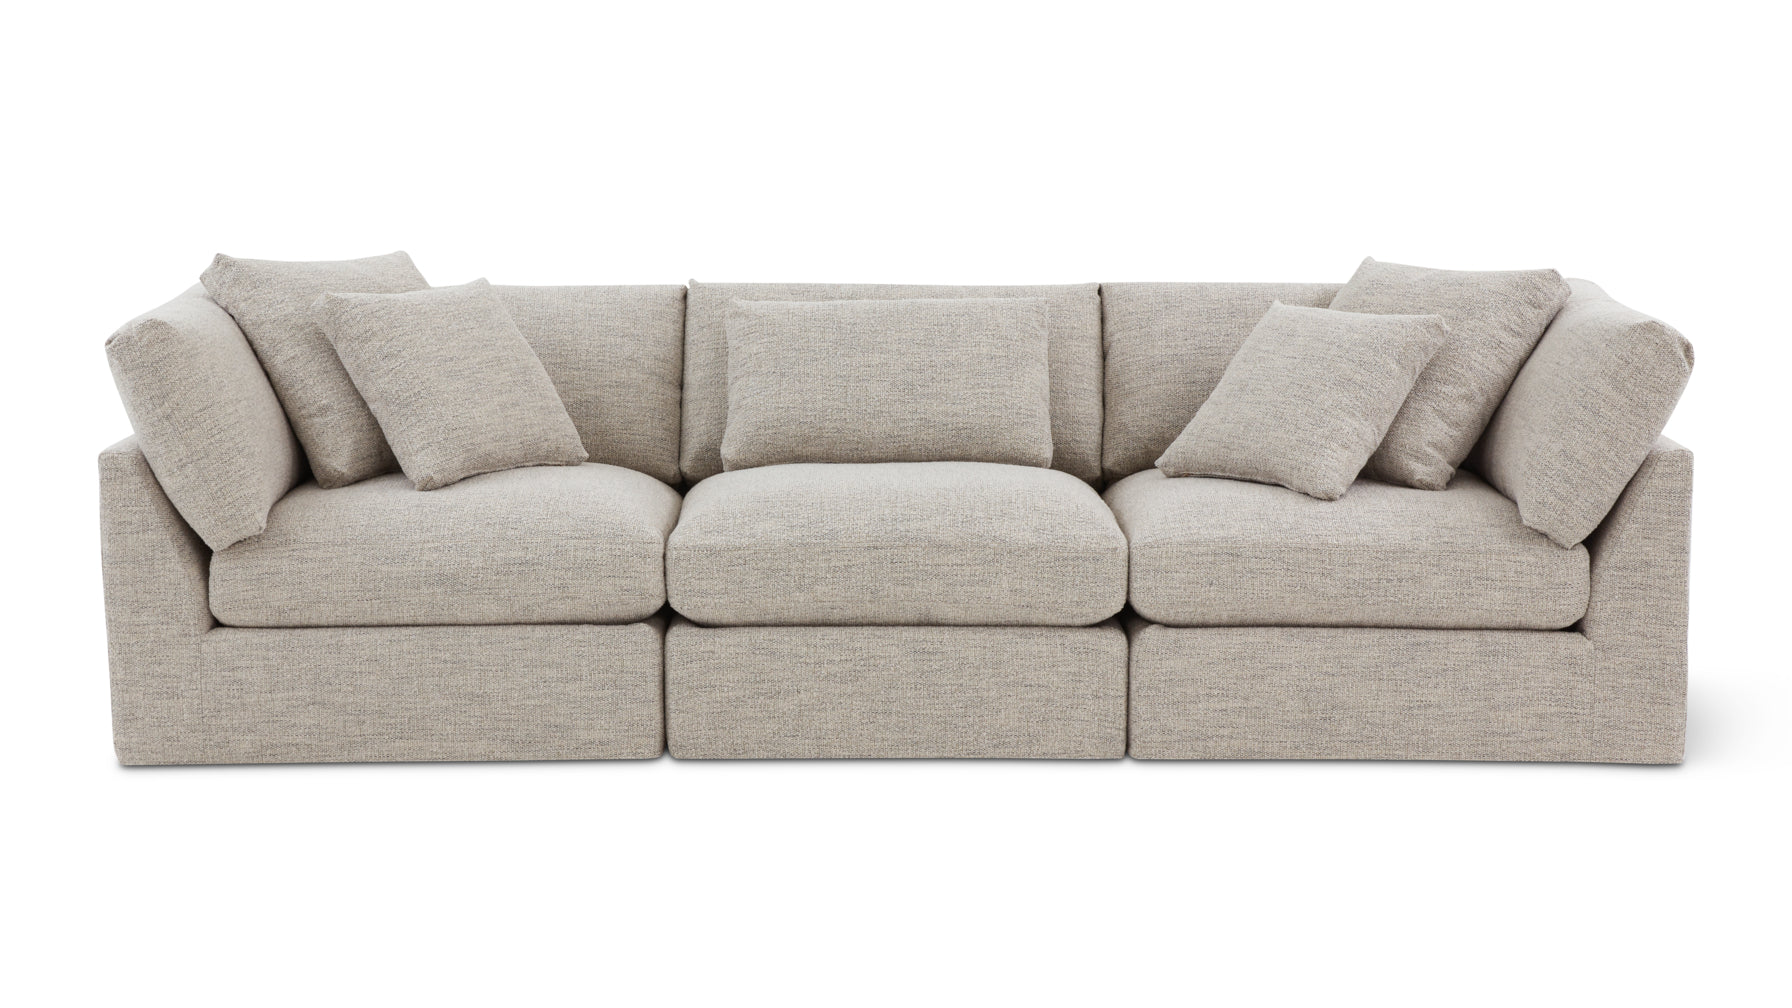 Get Together™ 3-Piece Modular Sofa, Large, Oatmeal - Image 1